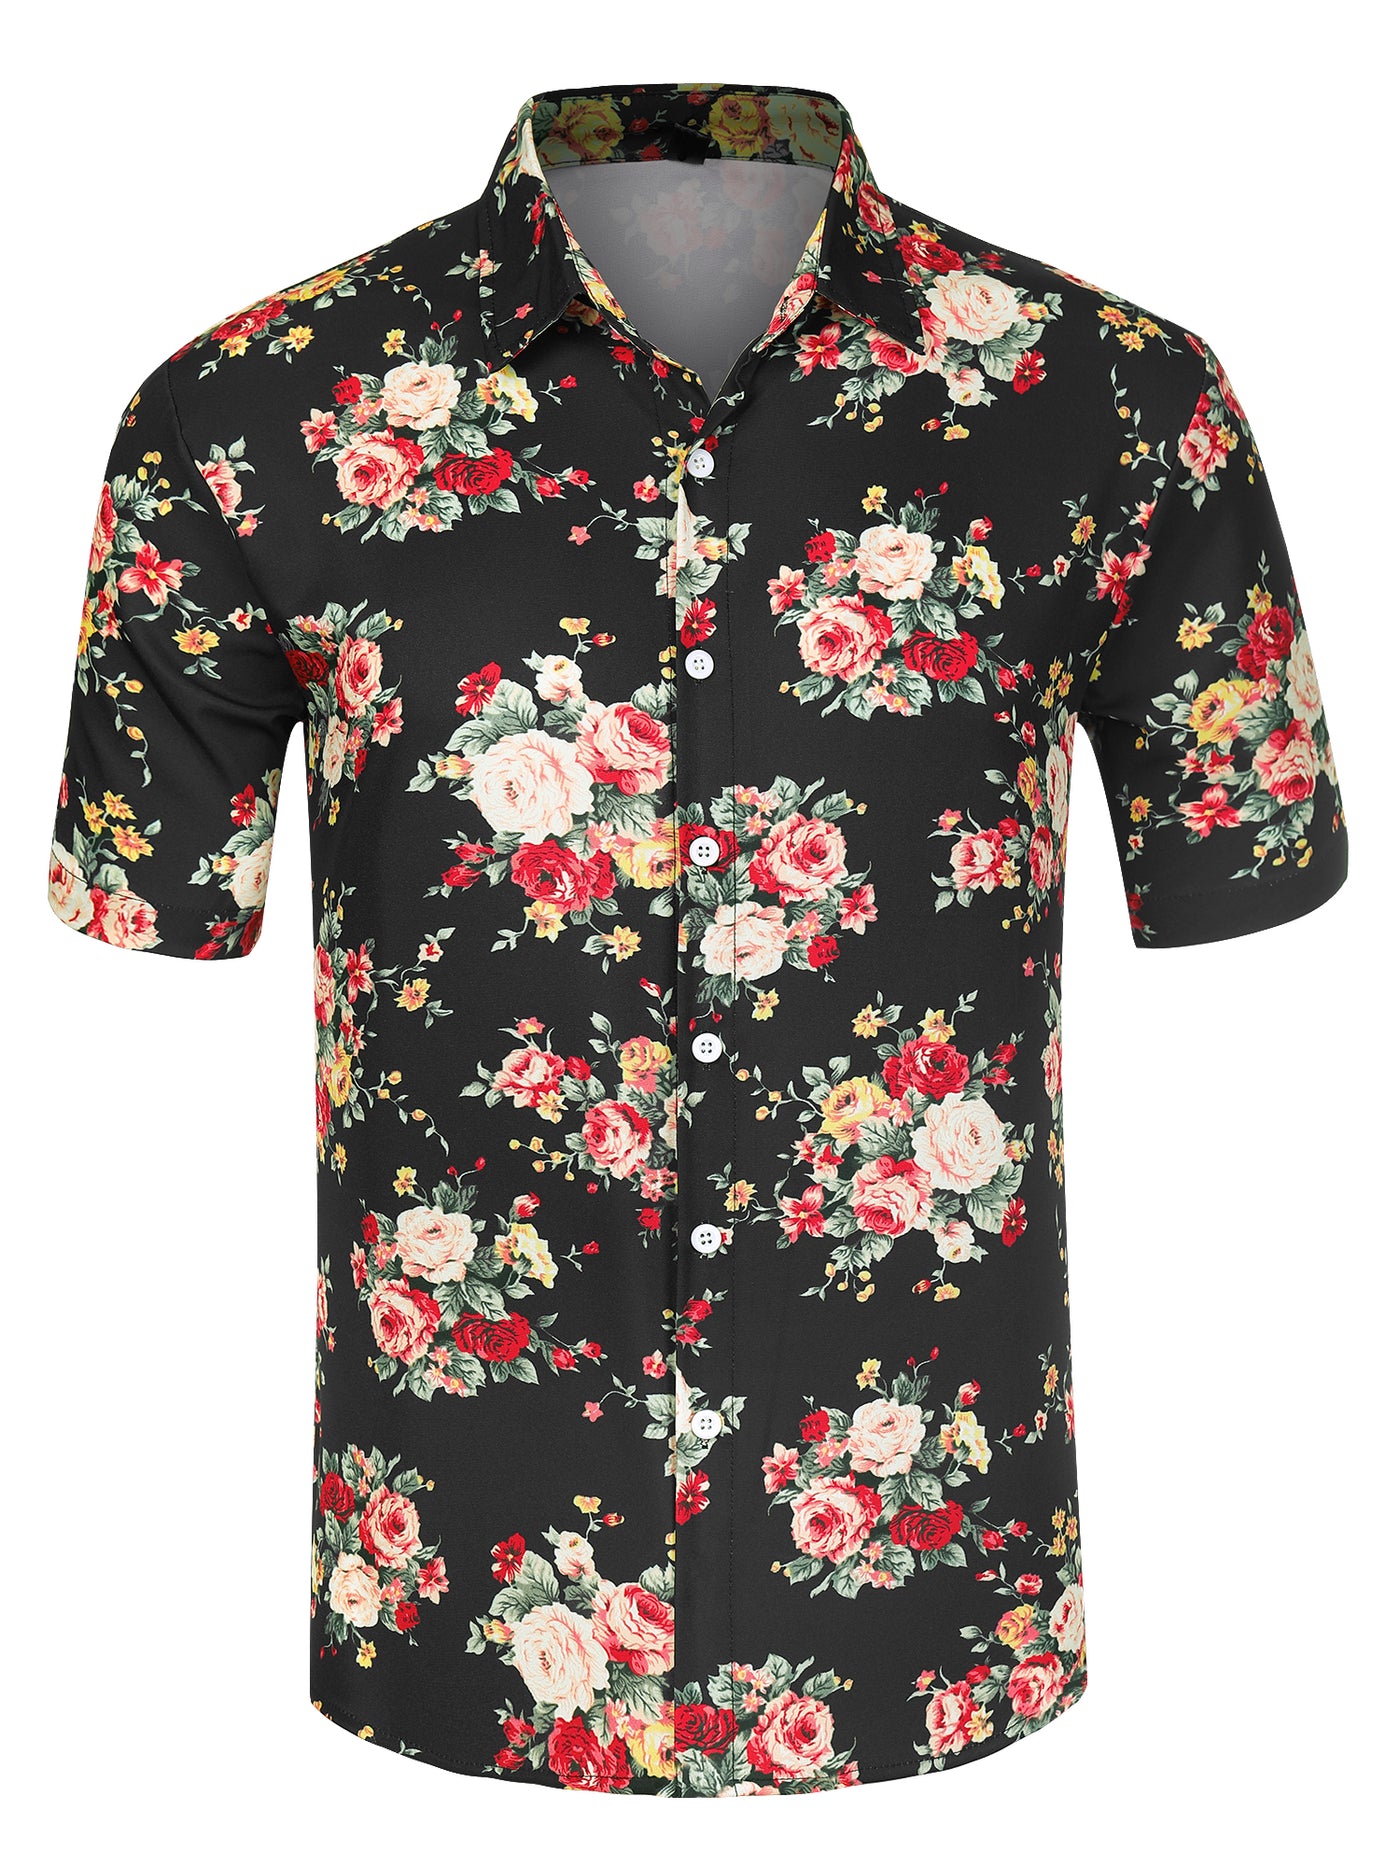 Bublédon Tropical Flower Printed Short Sleeve Hawaiian Shirts